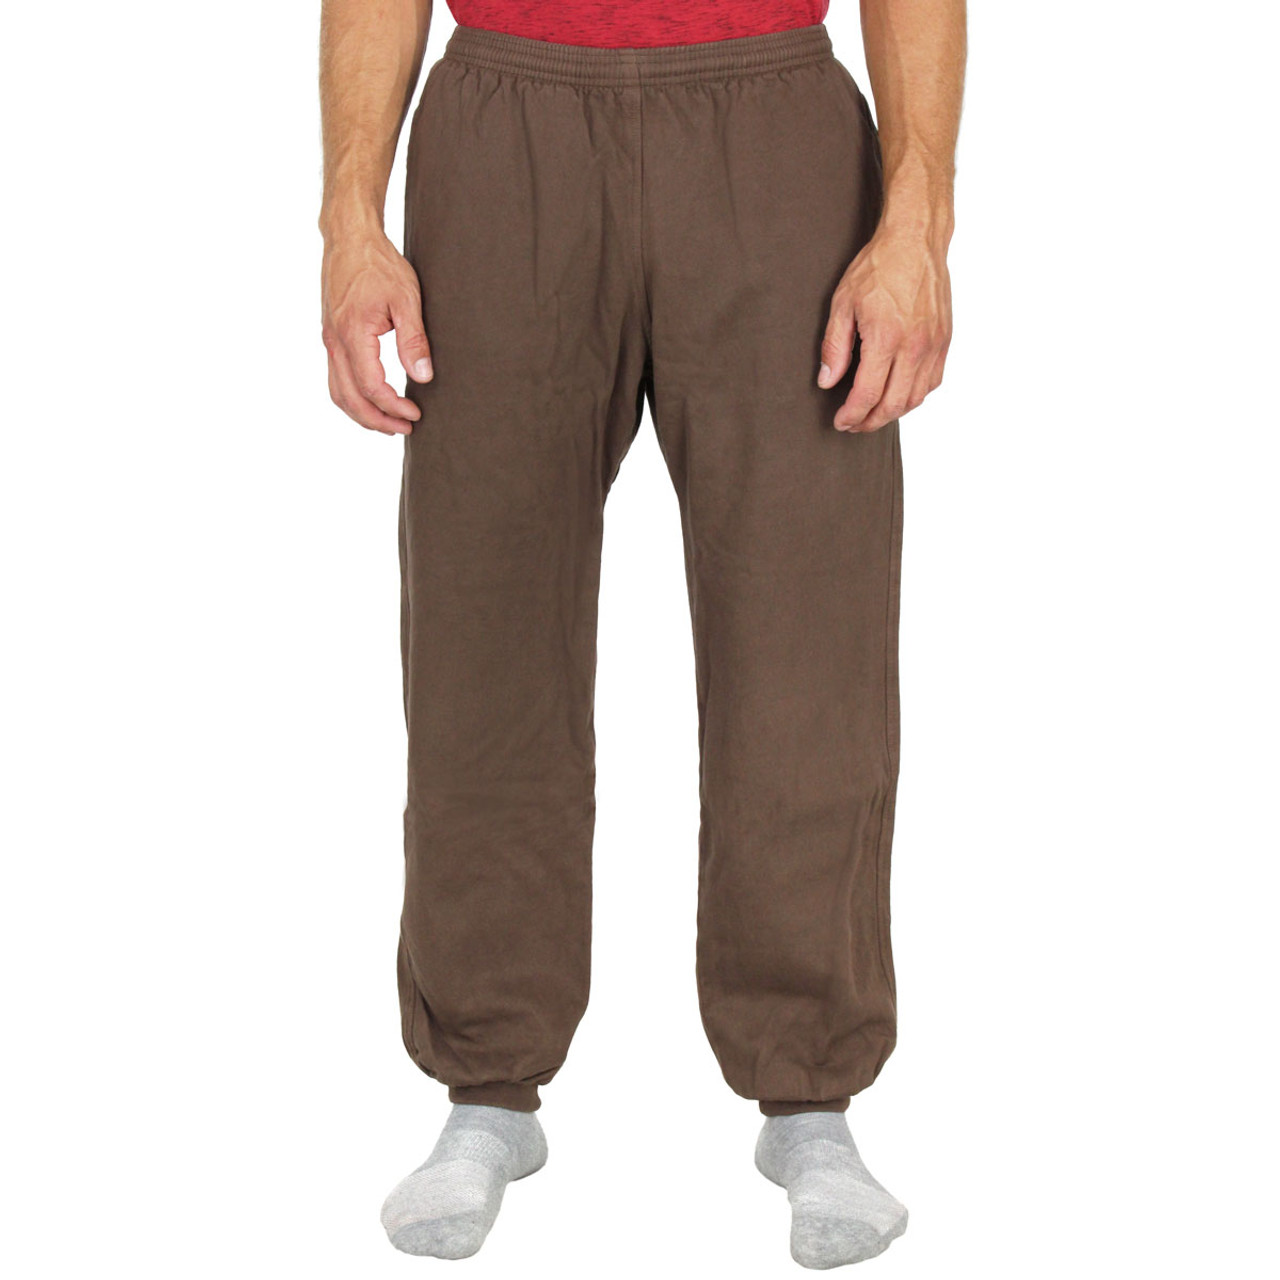 Safort 28 31 34 Inseam Regular Tall 100% Cotton Sweatpants